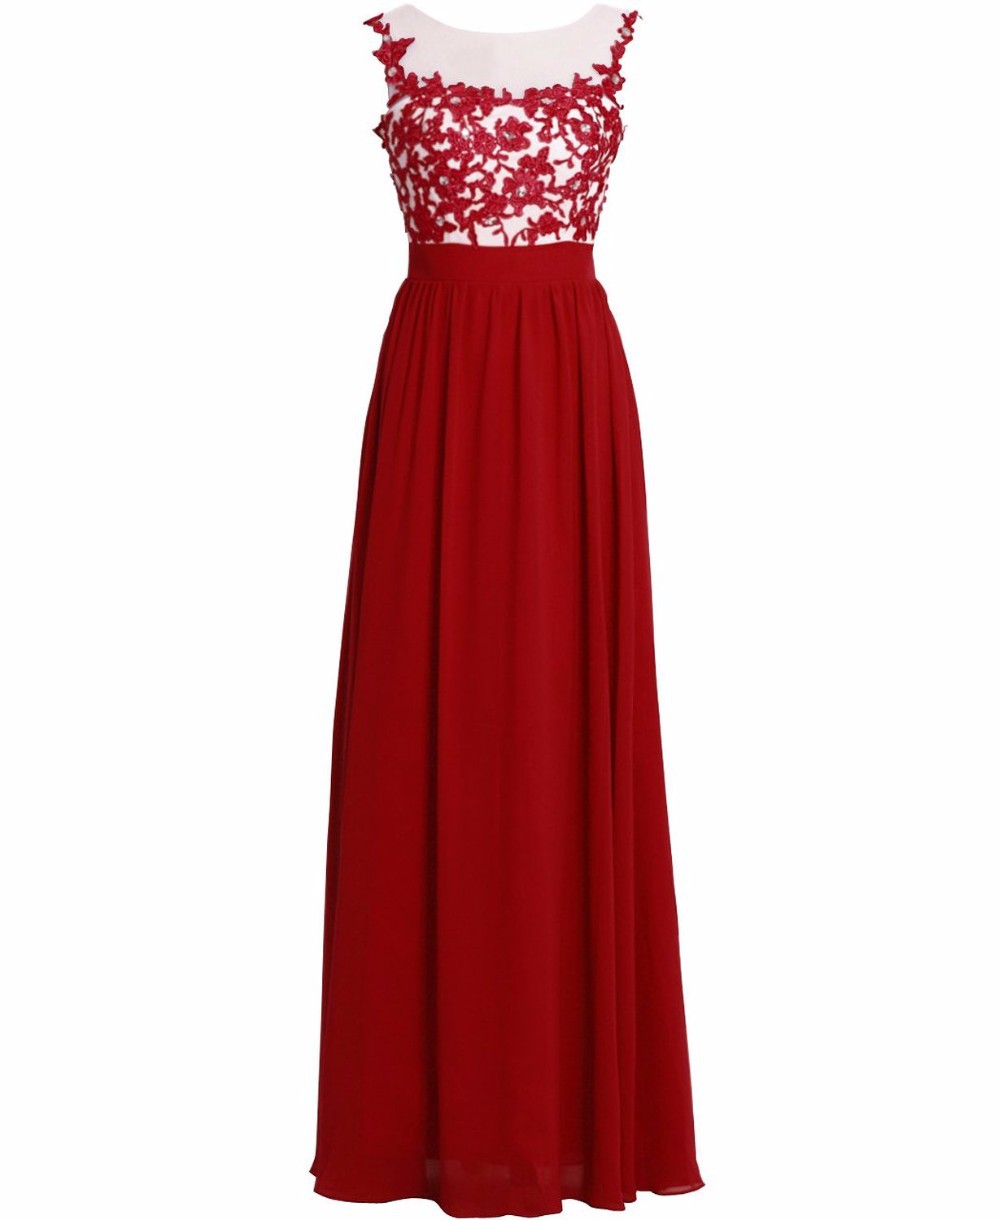 Elegant Long Prom Dresses Strapless Cap Sleeve Lace Chiffon Party Gowns Zipper Evening Dress